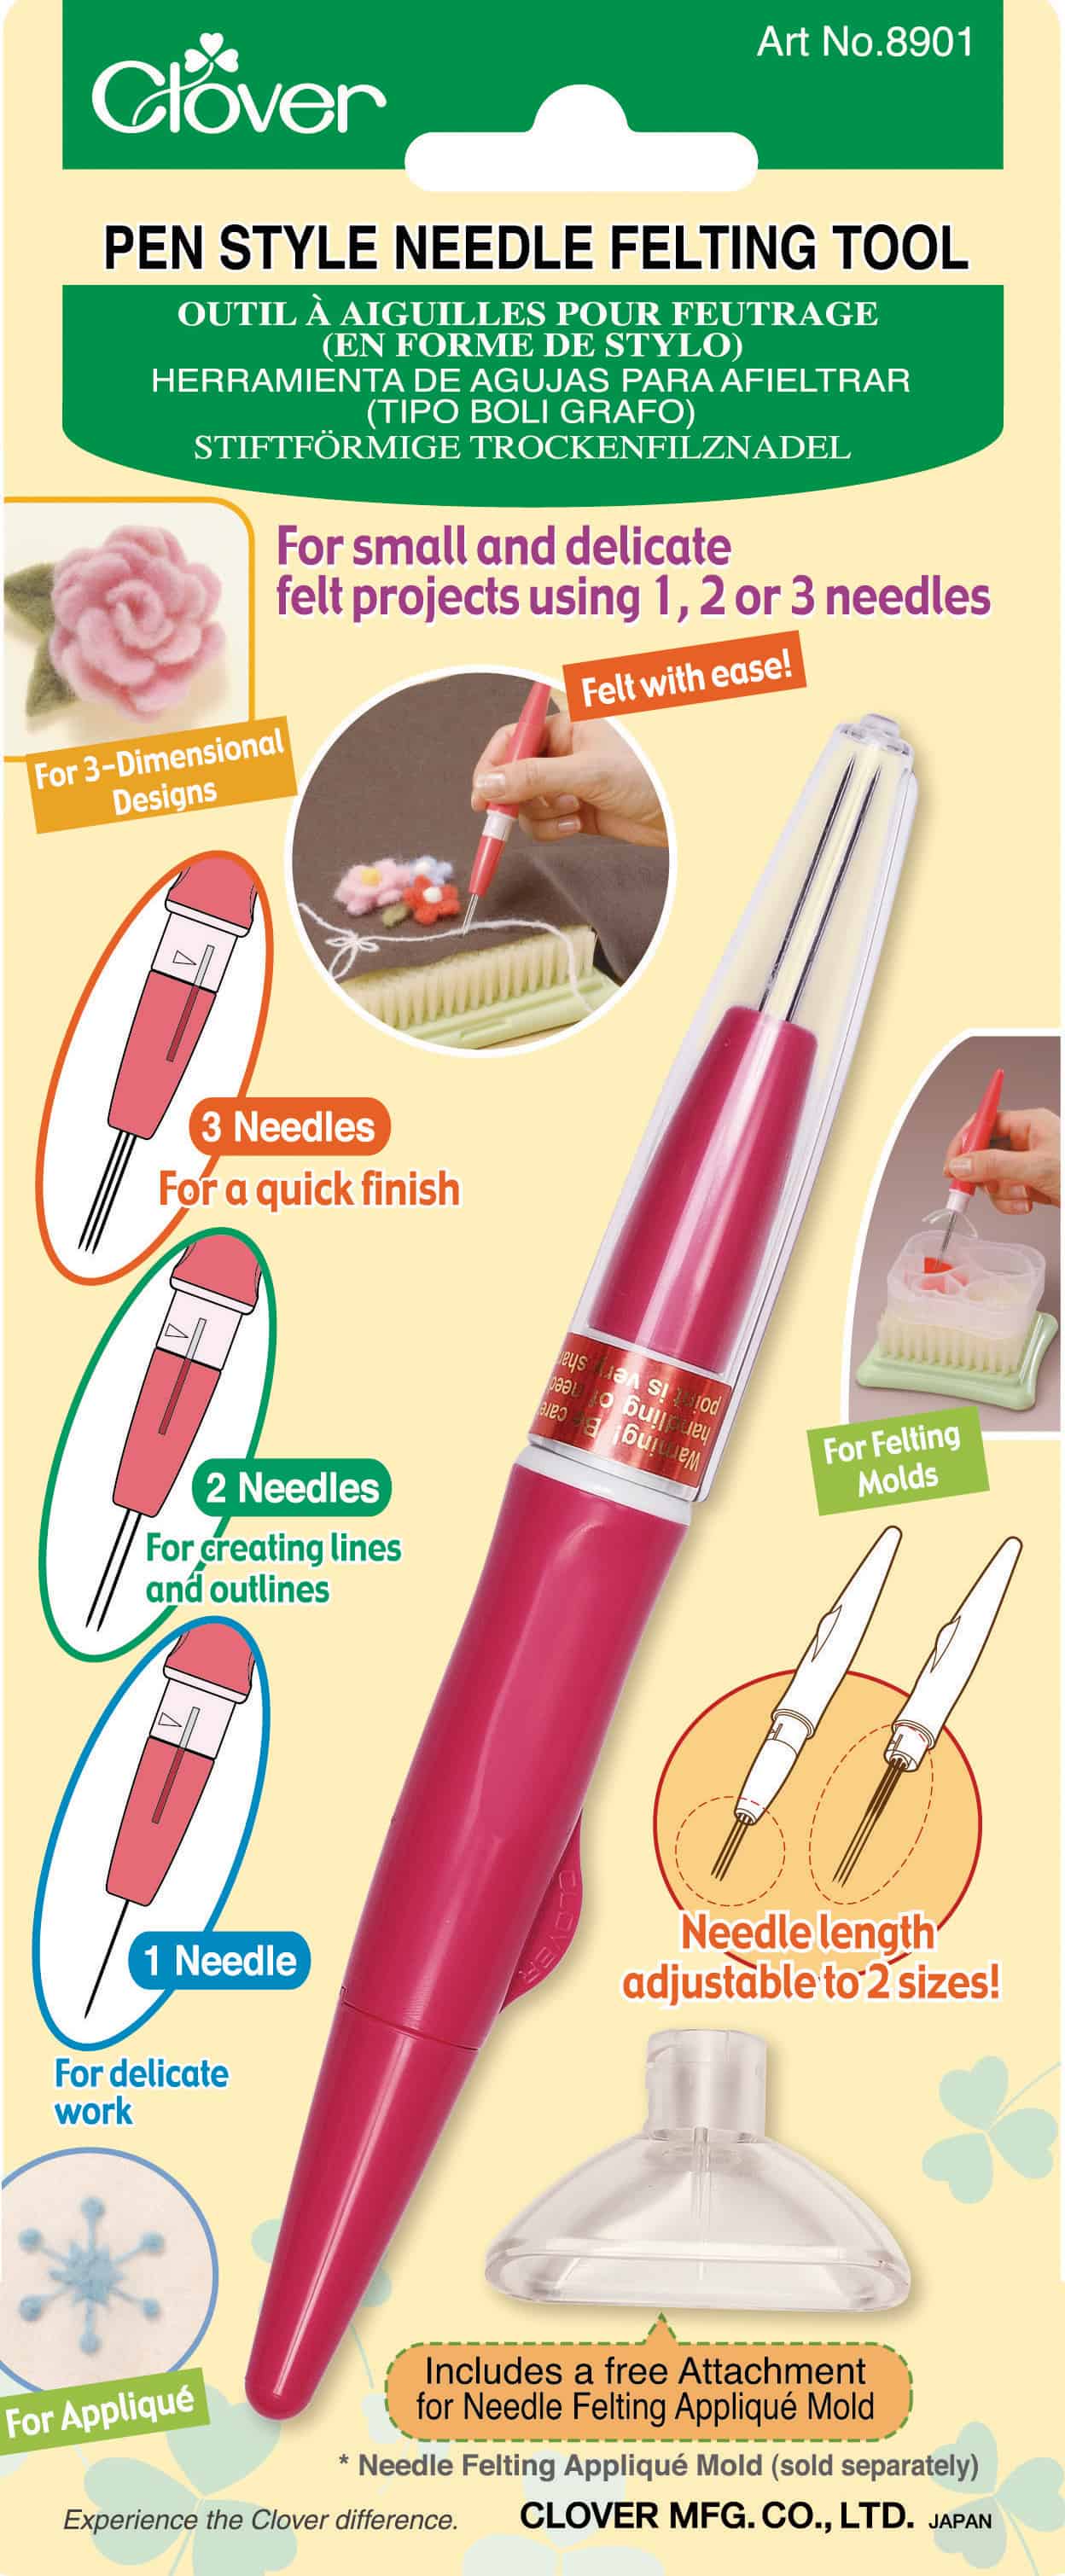 8901 Pen Style Needle Felting Tool (IP)WEB